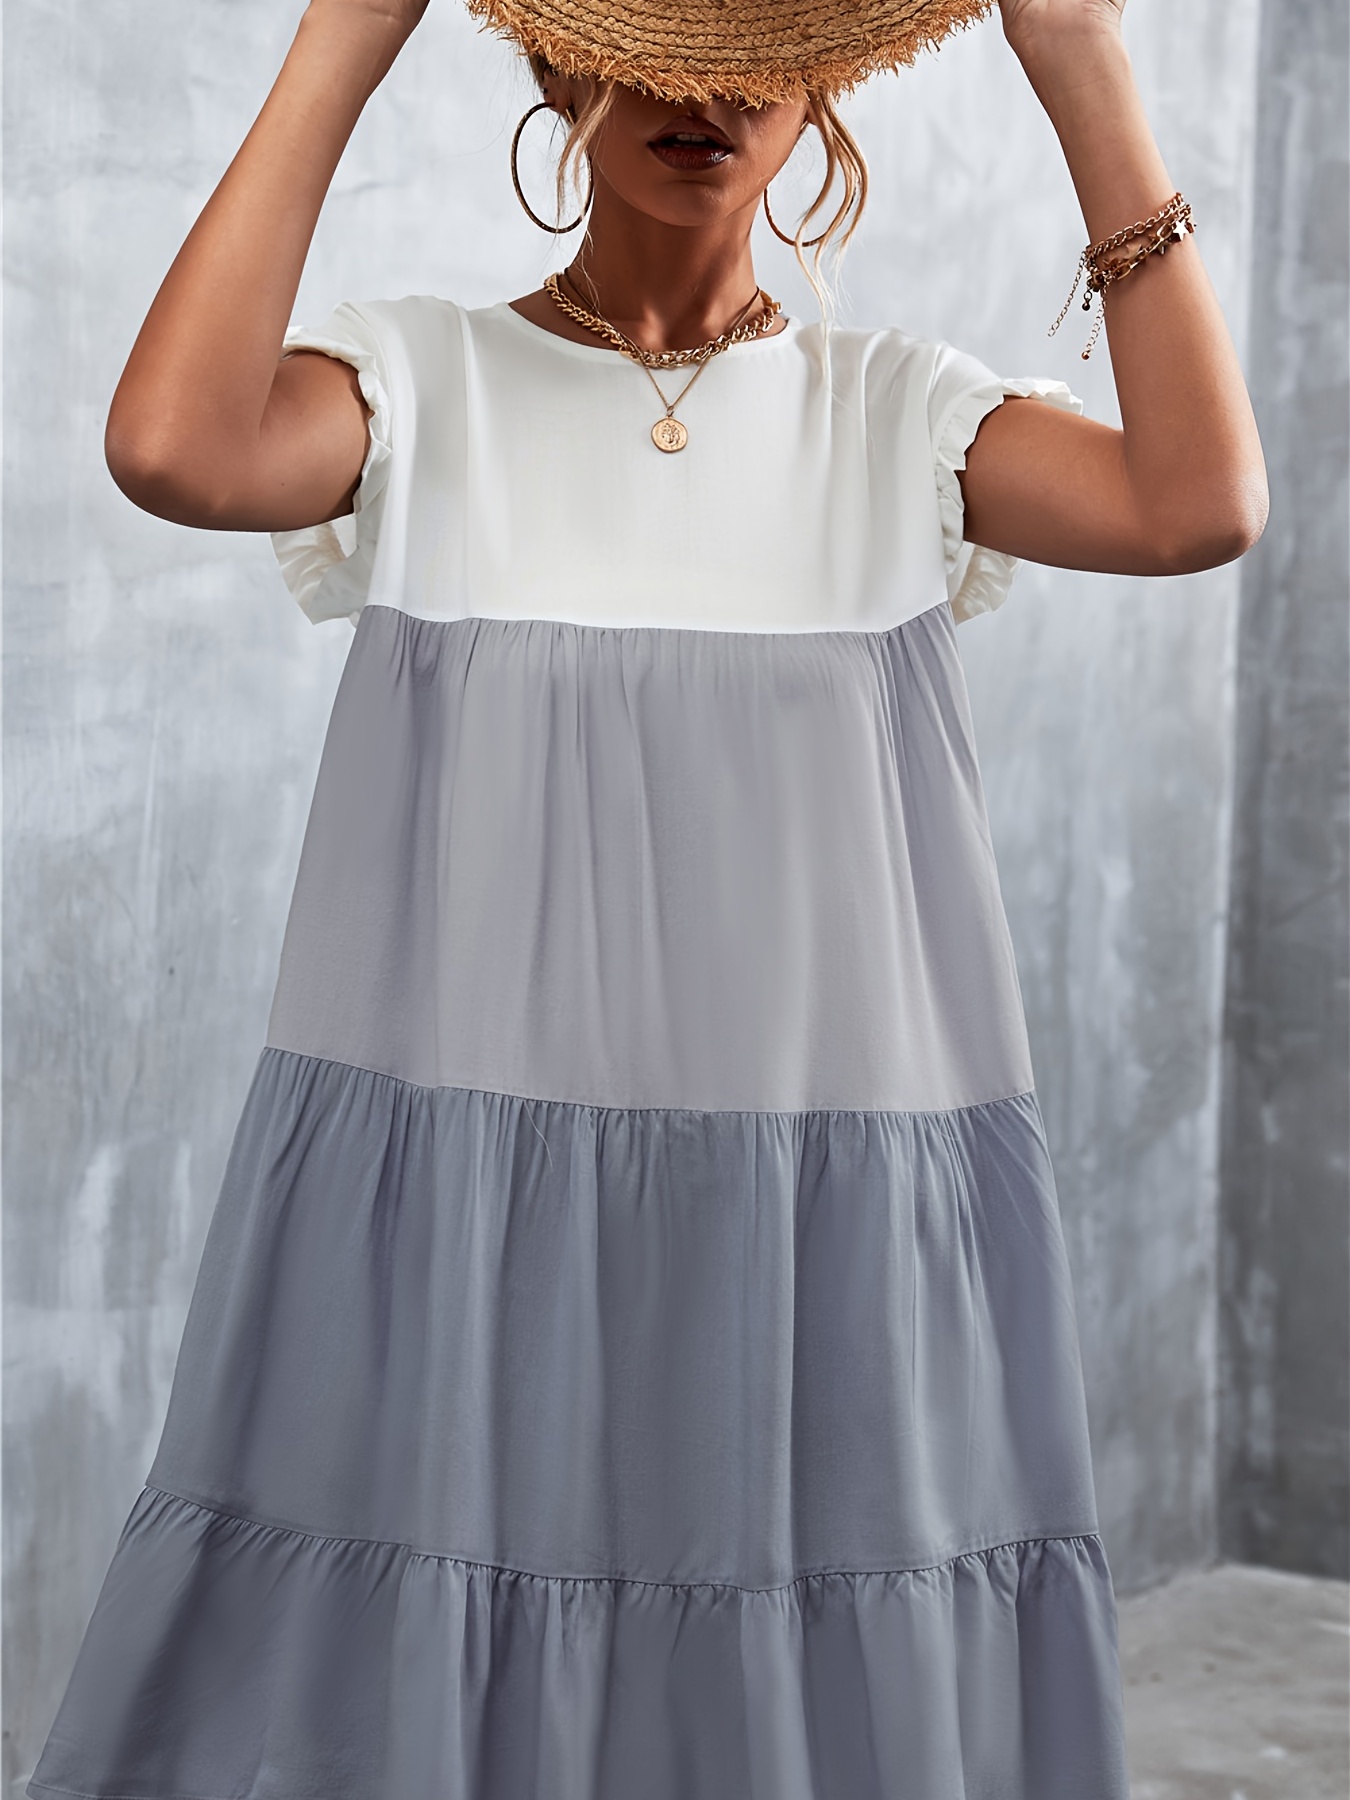 The Kimmy Mixed Print Ruffle Sleeve Top - FINAL SALE  Pleated dress short,  Ruffled sleeve top, Mixing prints